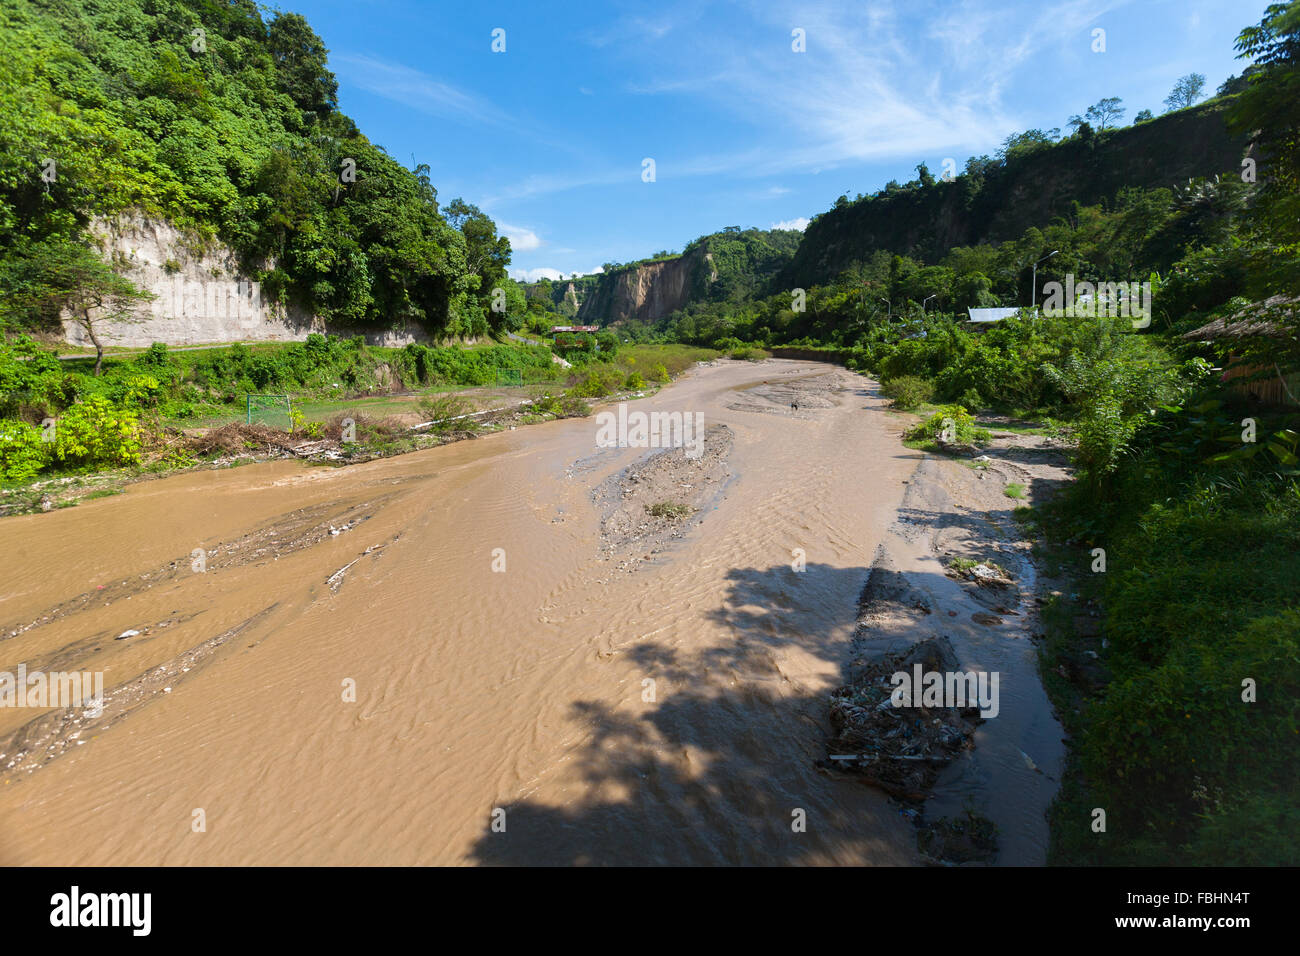 A muddy river in Ngarai Sianok (Sianok Canyon) in Bukittinggi, West Sumatra, Indonesia. Stock Photo